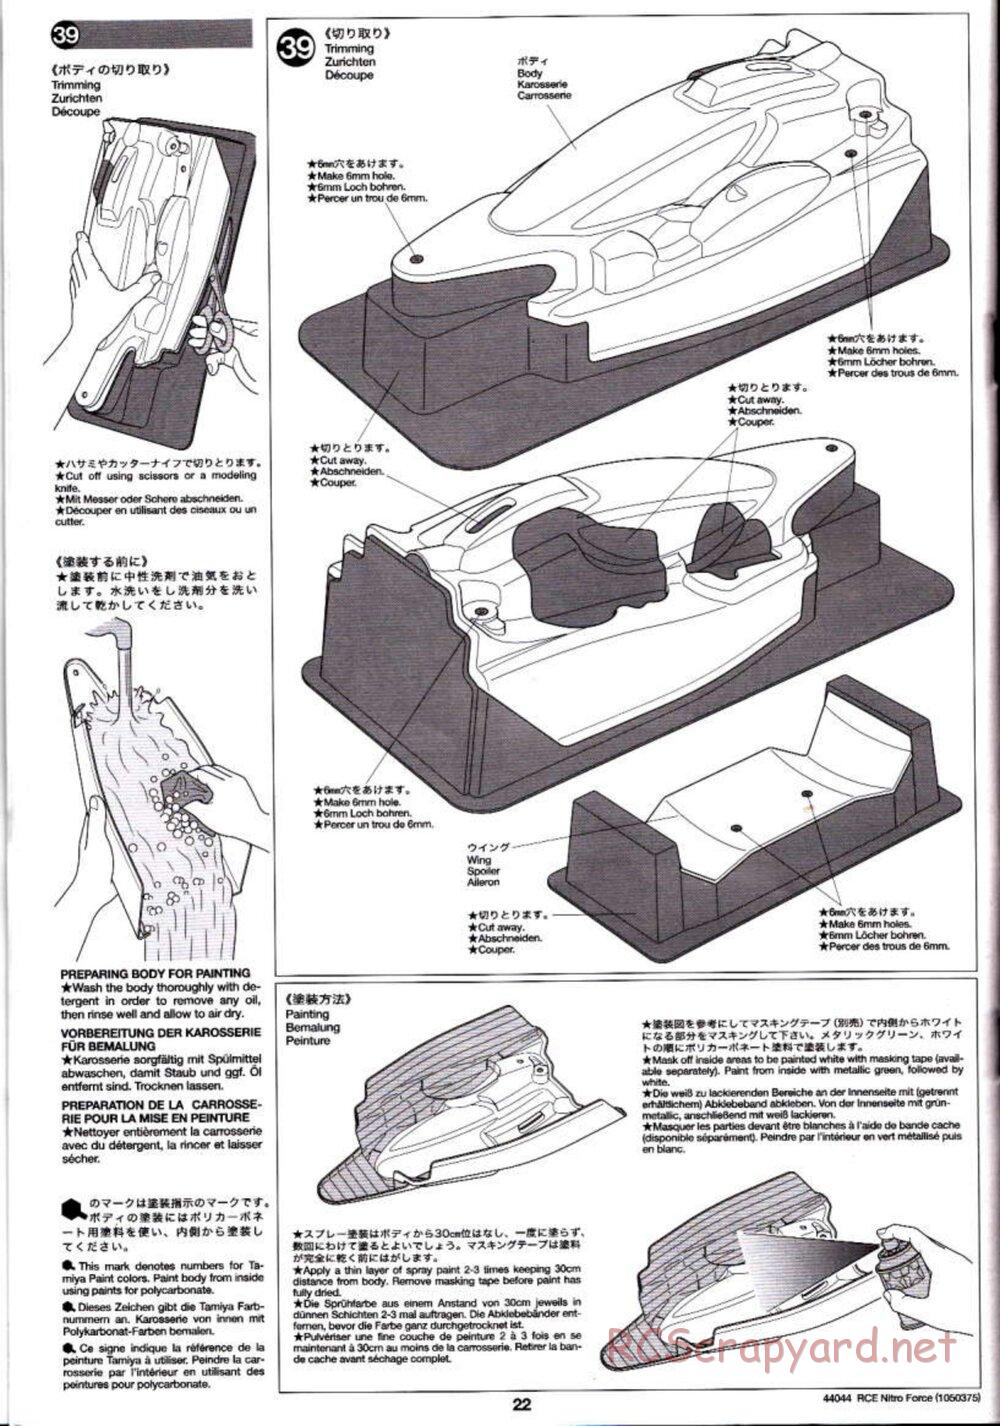 Tamiya - Nitro Force - NDF-01 Chassis - Manual - Page 22